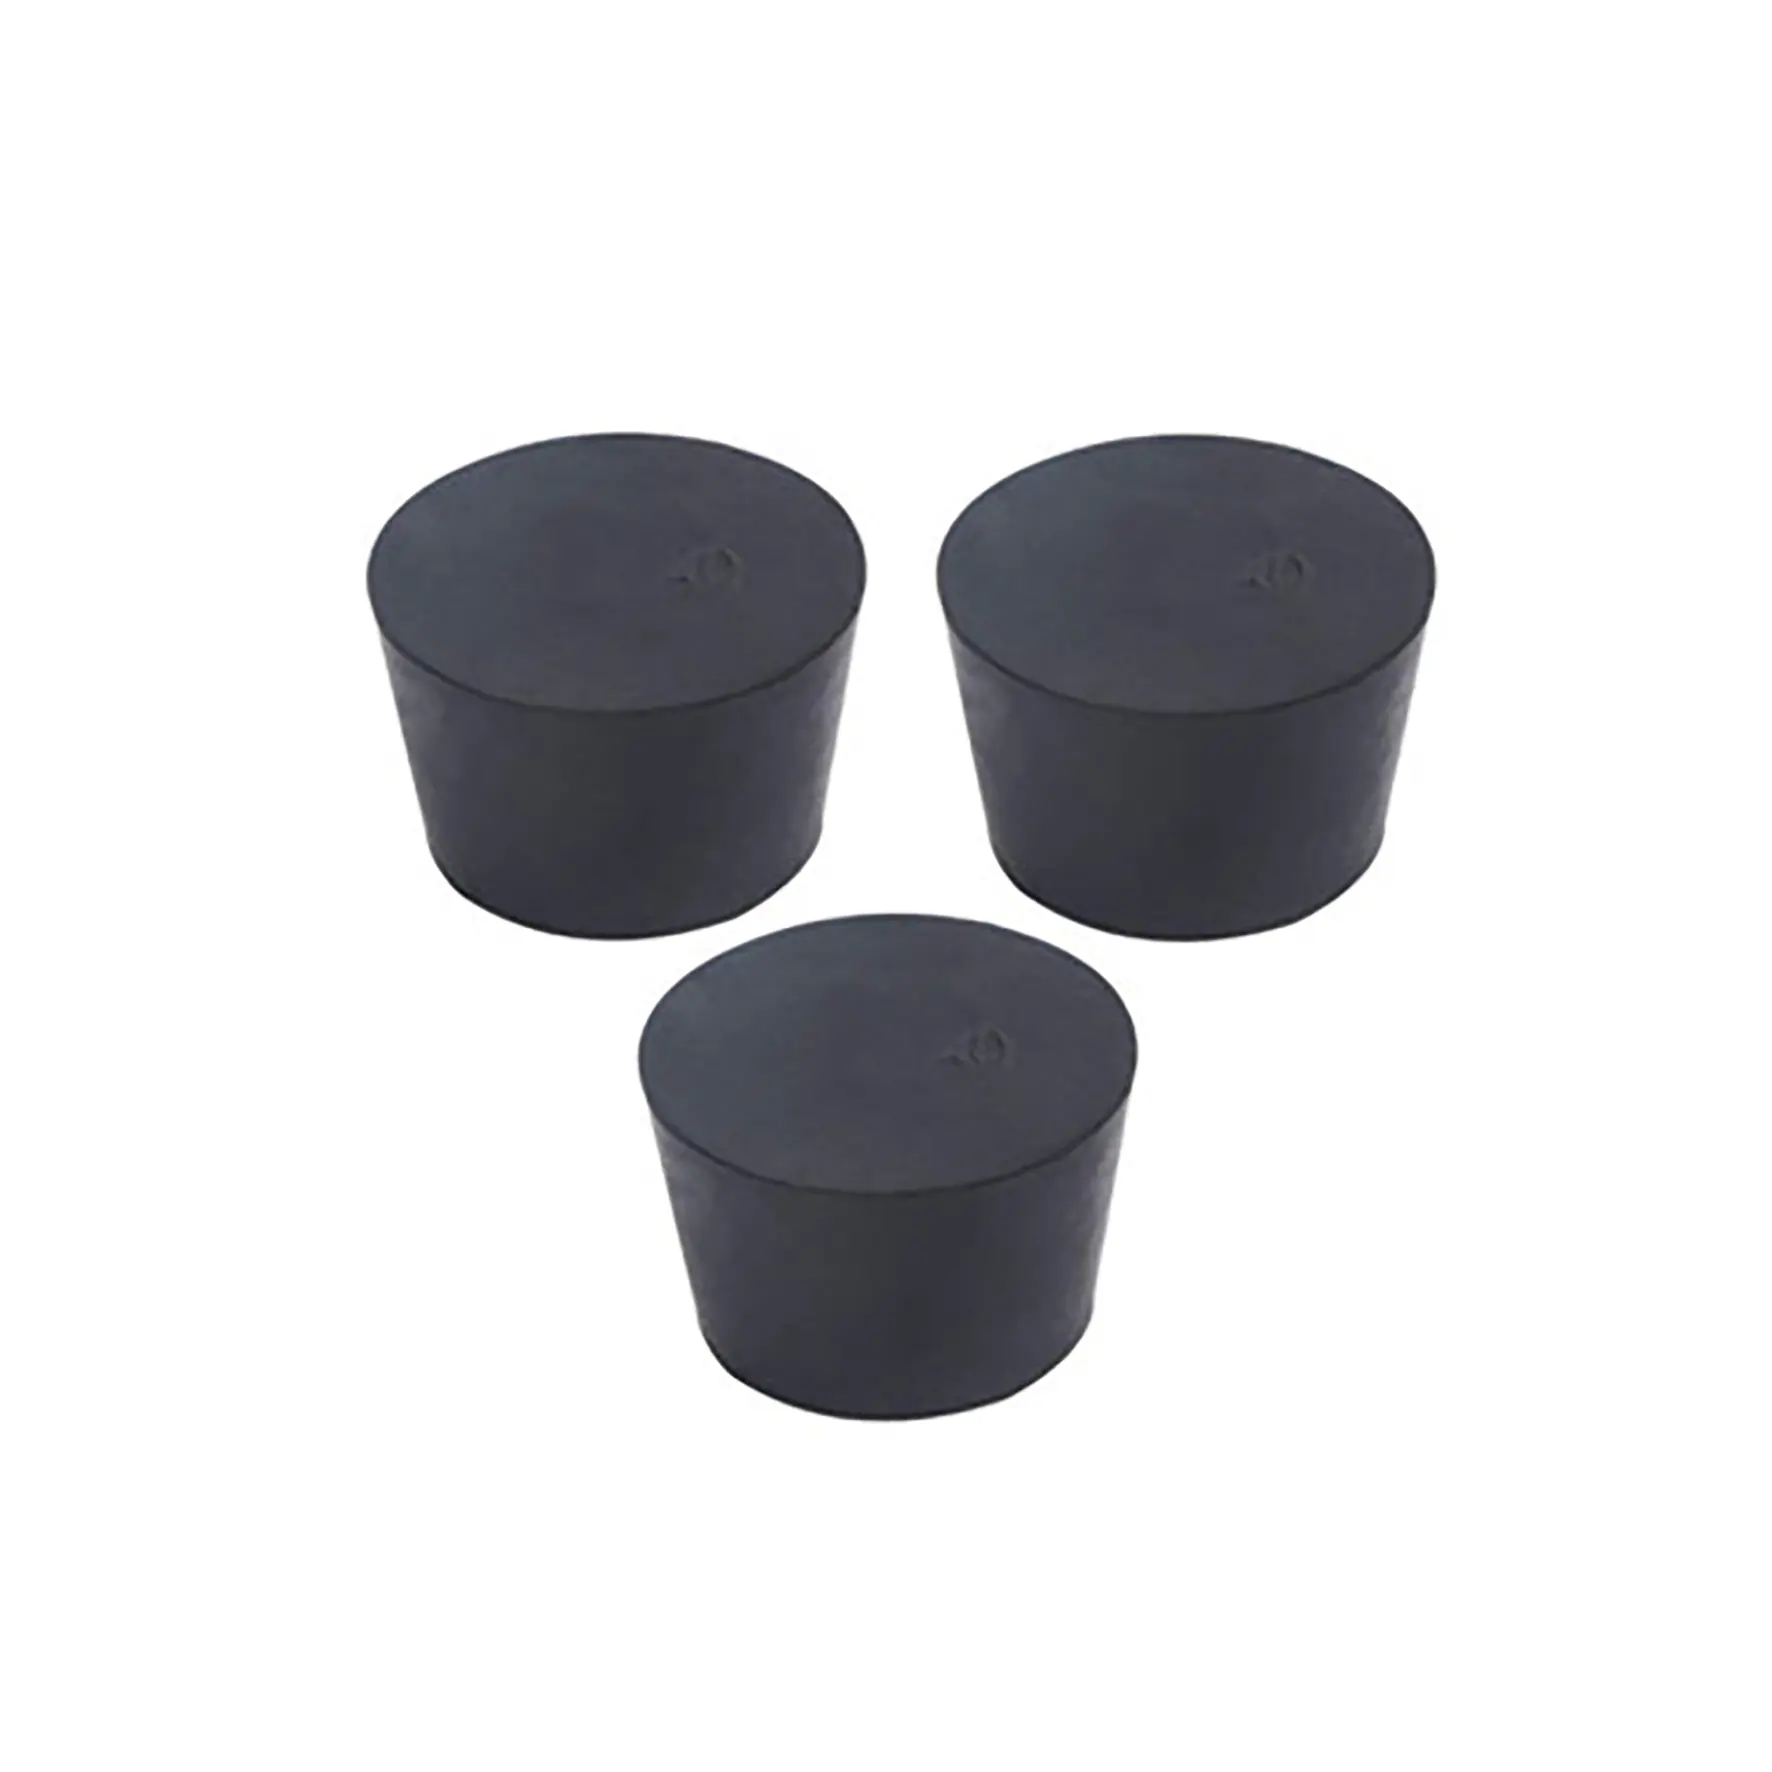 OEM rubber sbr round buffer block, neoprene cone stopper, solid rubber cylinder